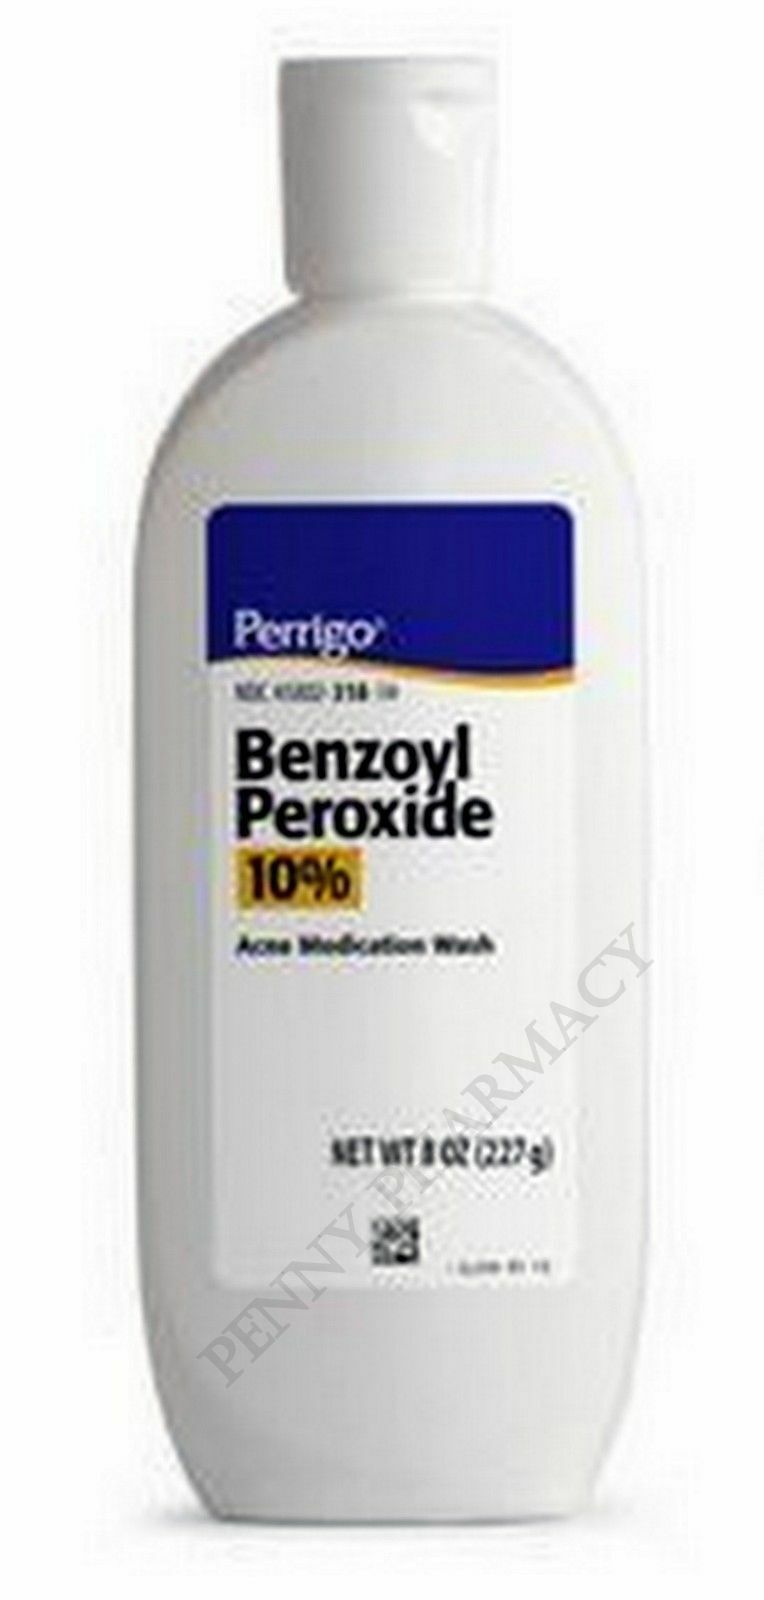 Benzoyl Peroxide 10% Wash 8oz  Xl Size Perrigo -  Pharmacy Grade